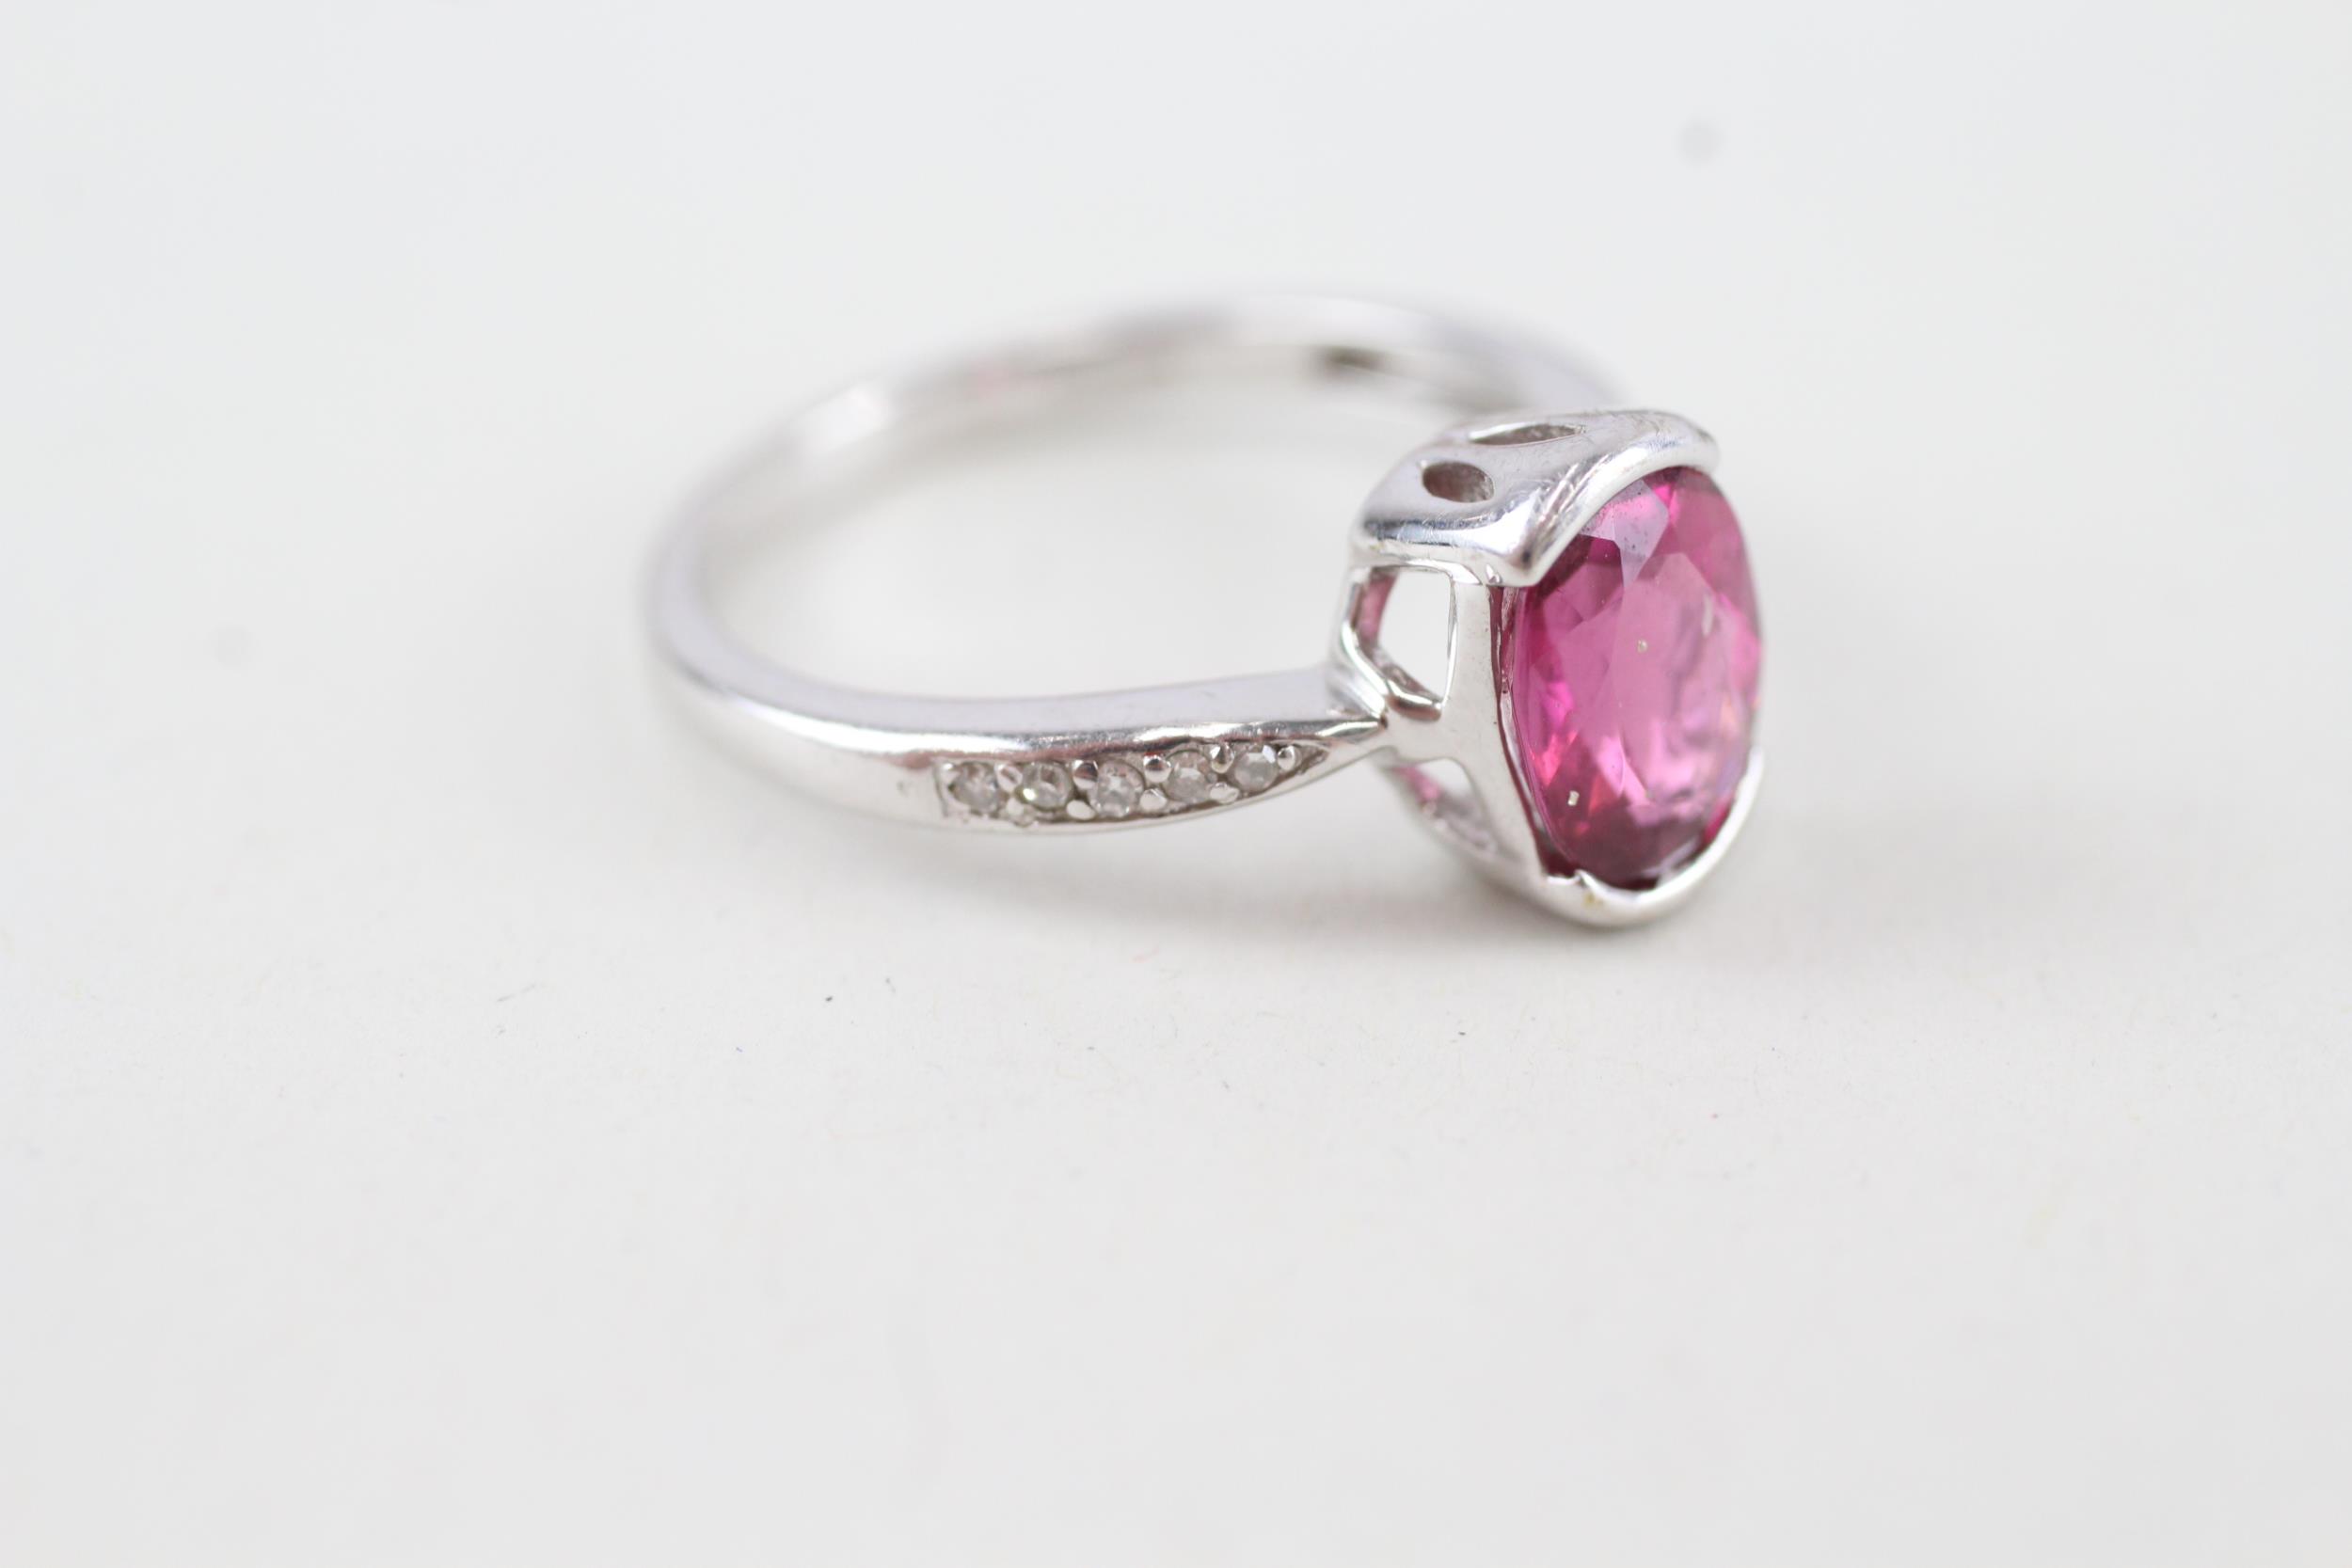 9ct gold oval cut pink tourmaline & diamond ring (2.8g) Size N - Image 2 of 4